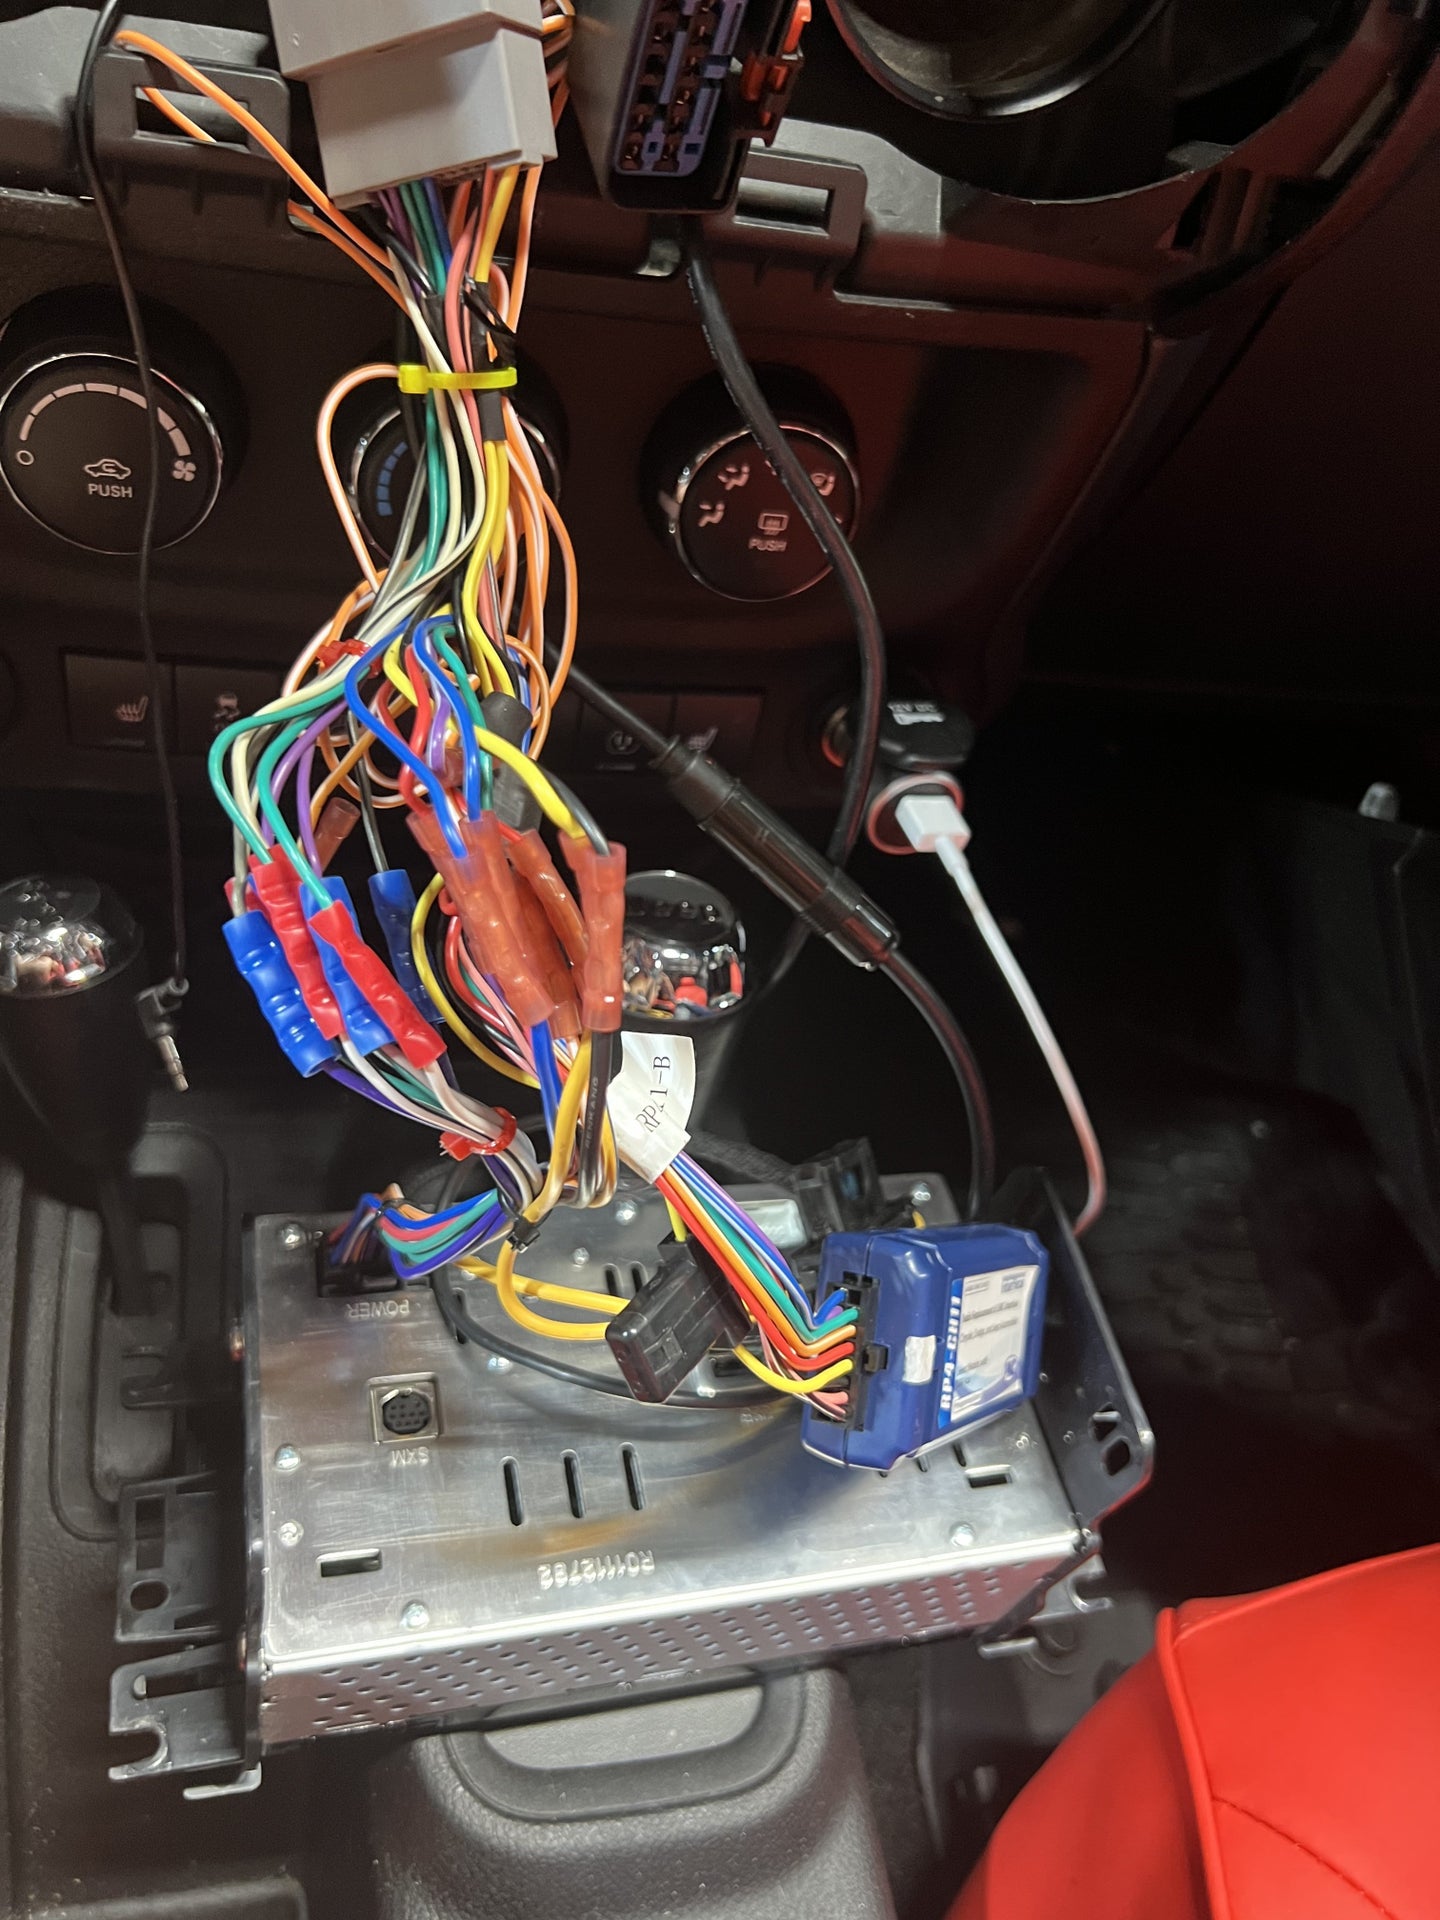 Jeep JK Stock Alpine stereo, no rear or sub speakers | Jeep Wrangler Forum